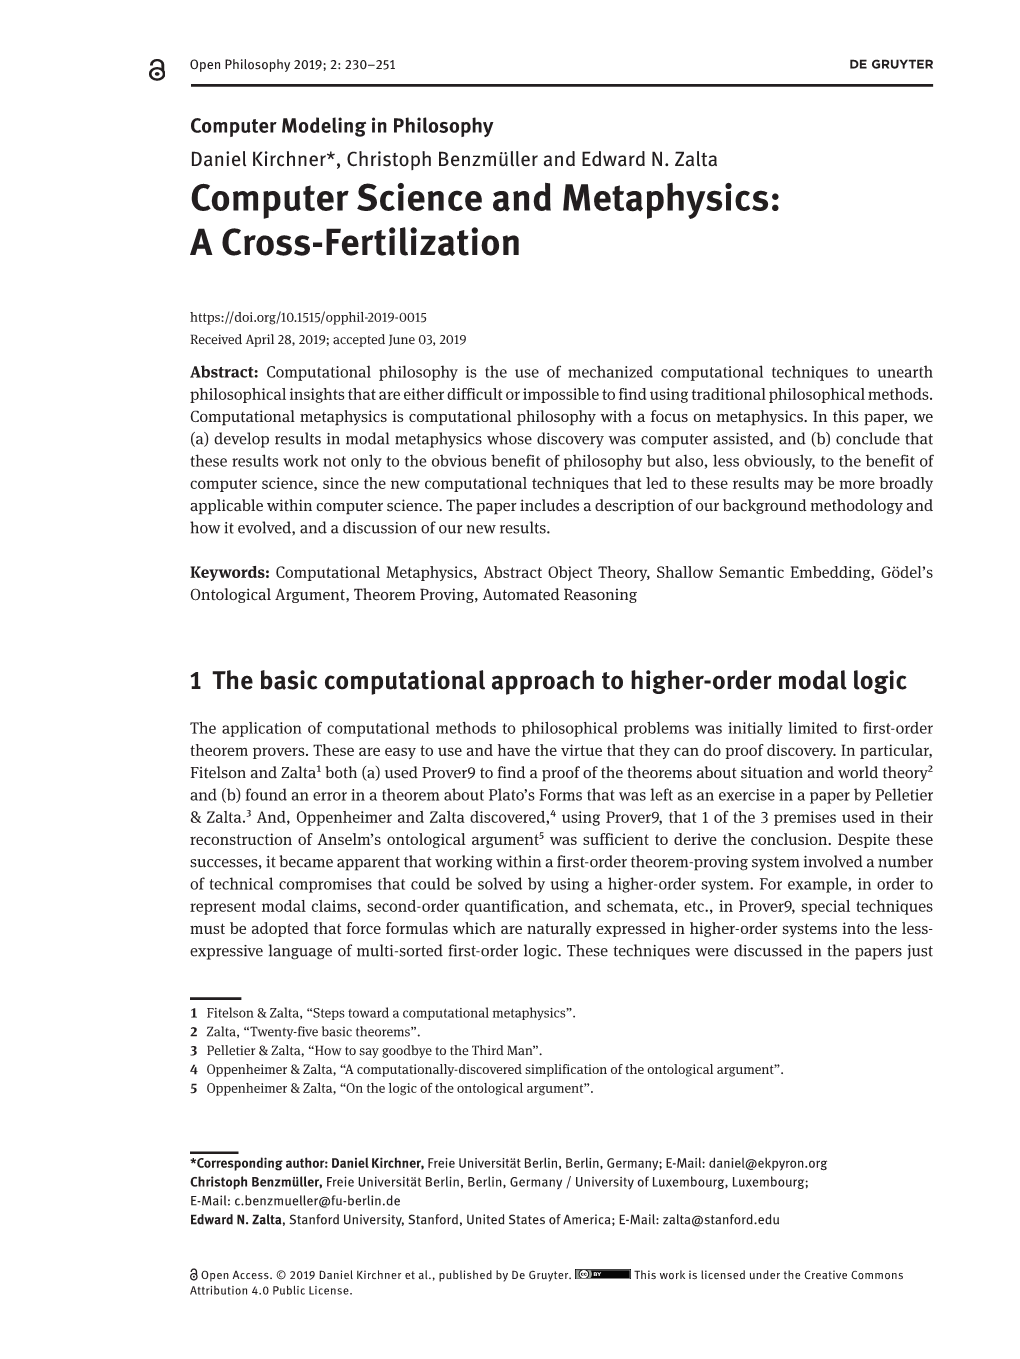 Computer Science and Metaphysics: a Cross-Fertilization